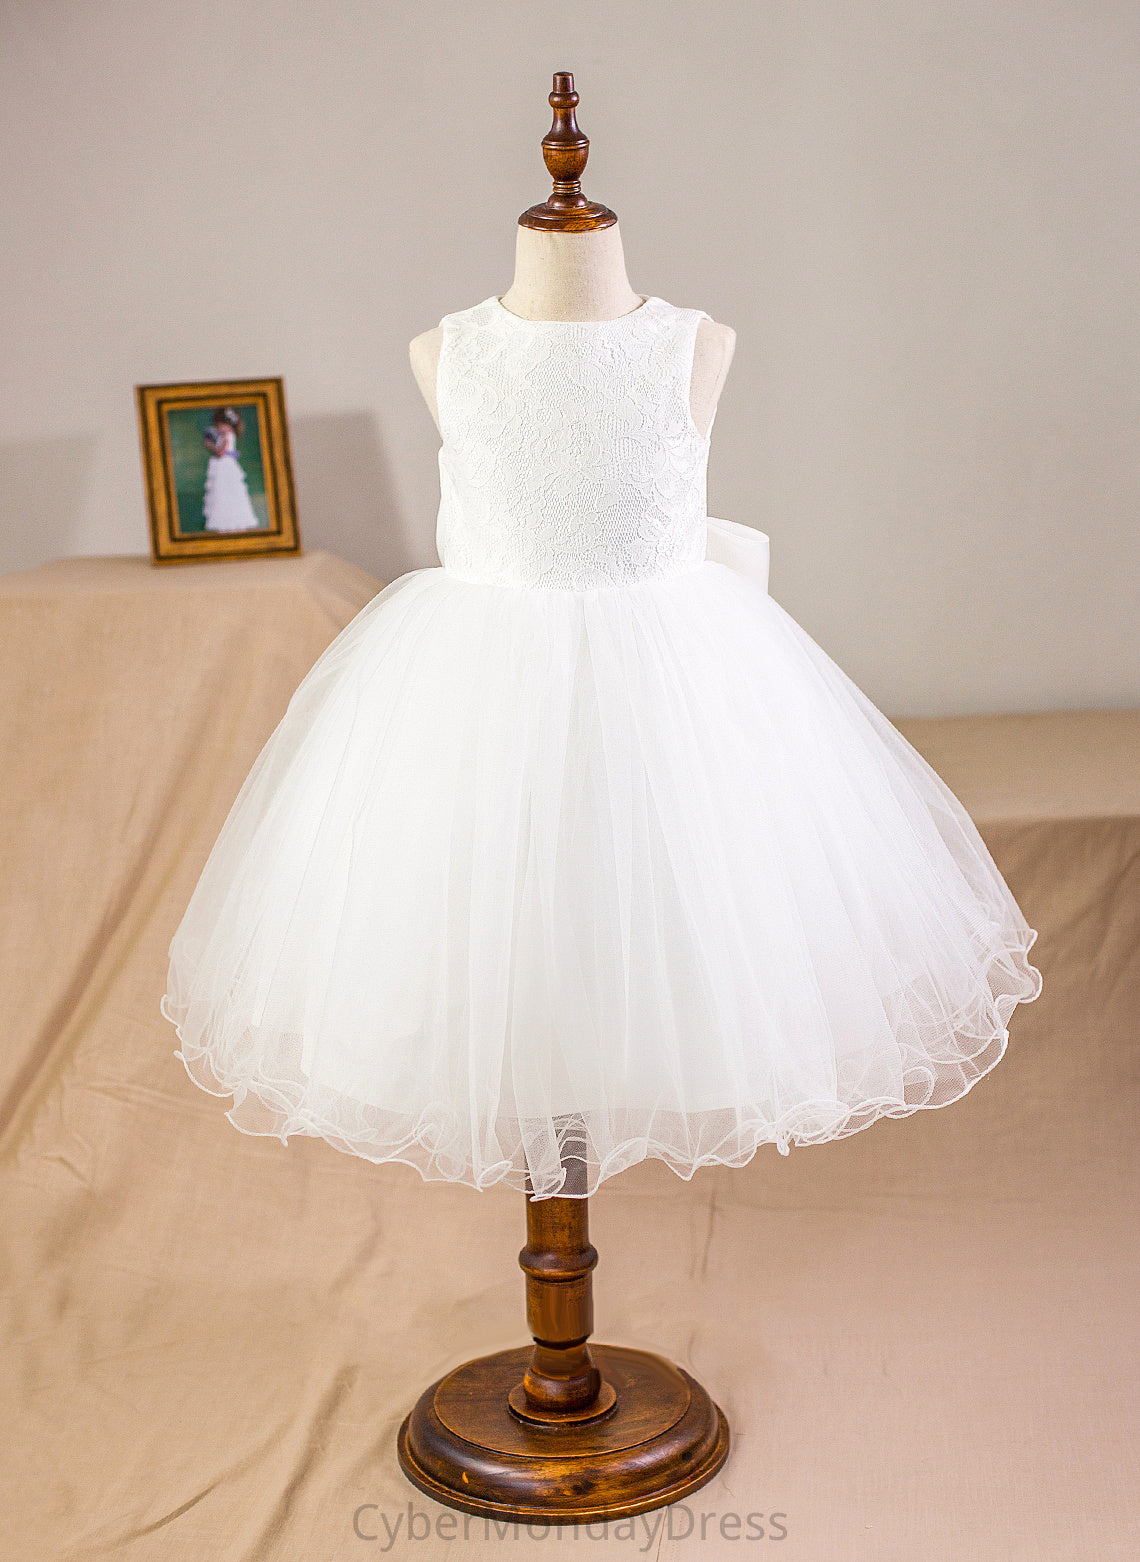 Ball-Gown/Princess Neck Kristin Knee-length Sleeveless Satin/Tulle/Lace Scoop Flower - With Bow(s) Flower Girl Dresses Girl Dress